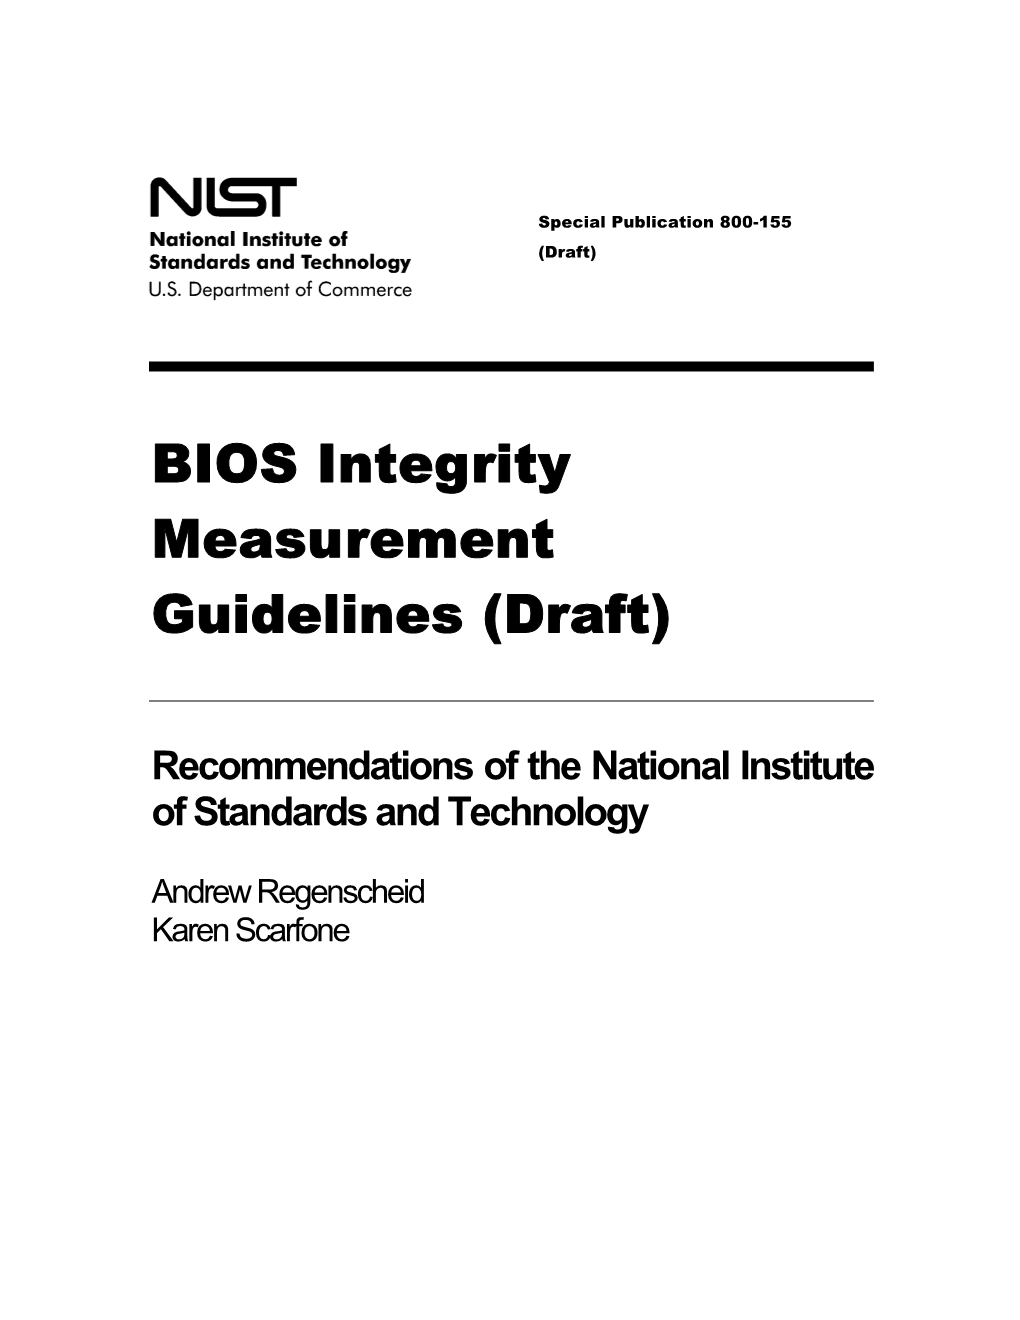 Draft SP 800-155, BIOS Integrity Measurement Guidelines